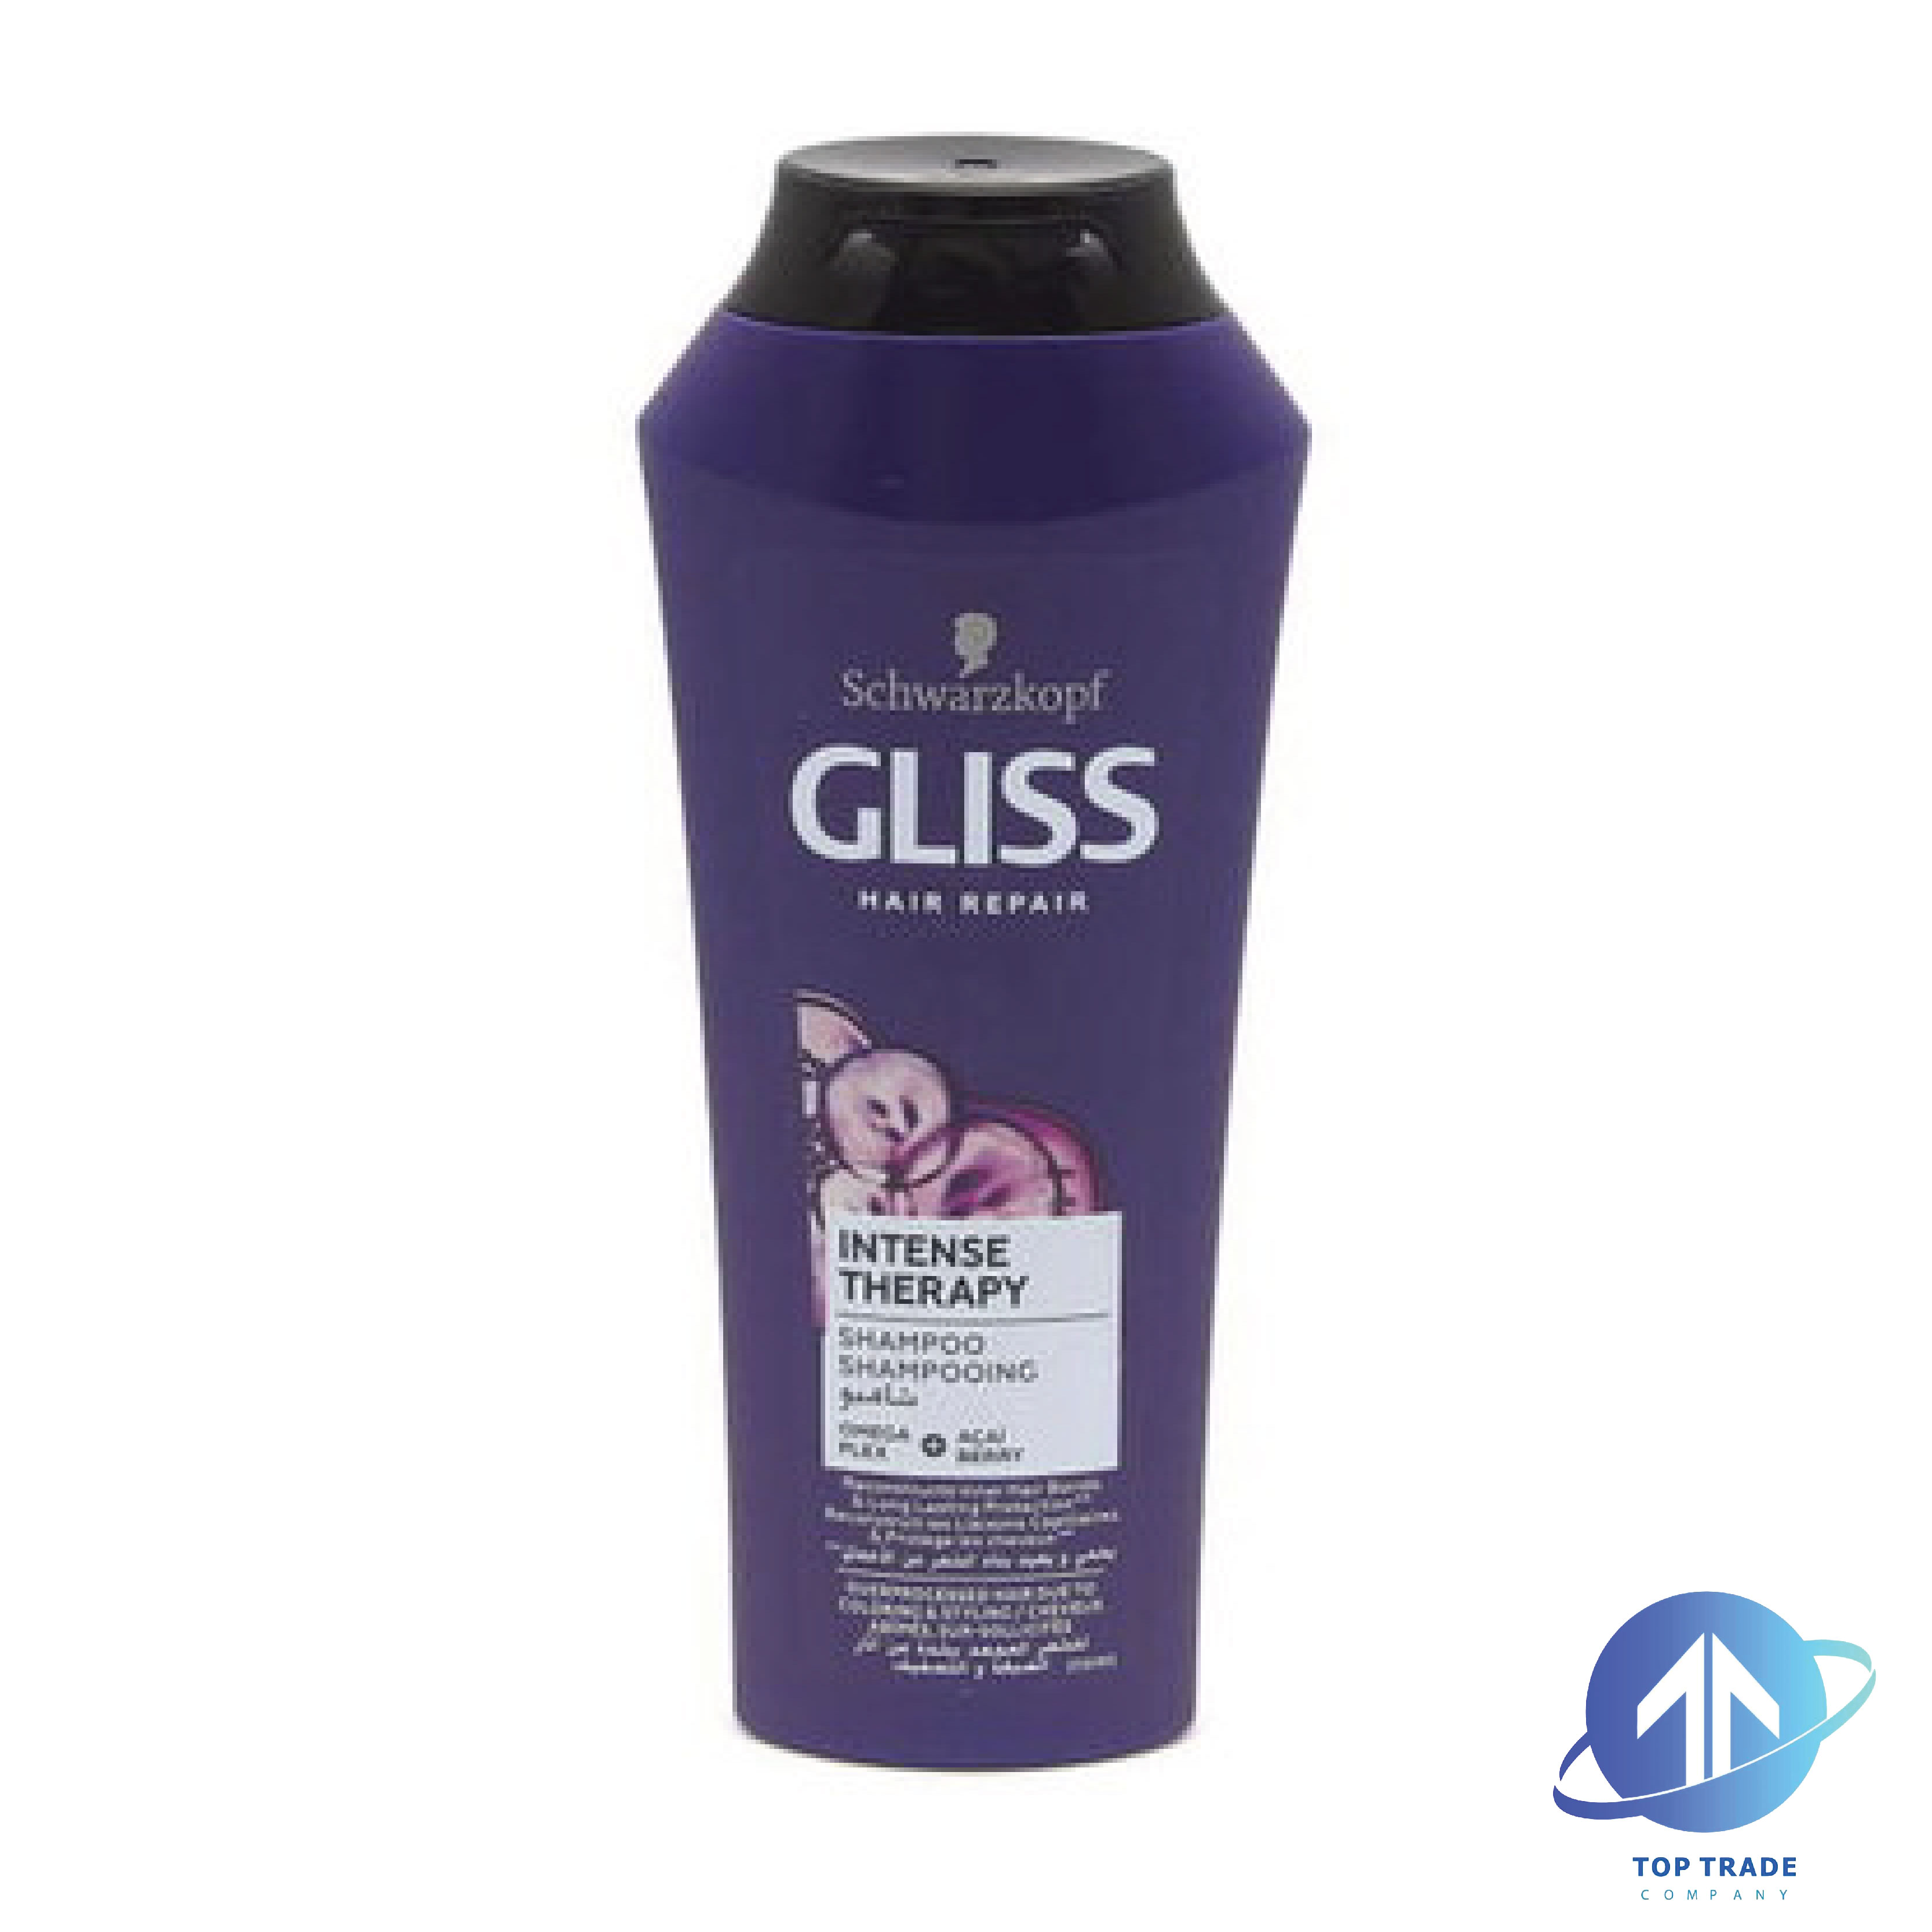 Gliss shampoo Intense Therapy 250ml